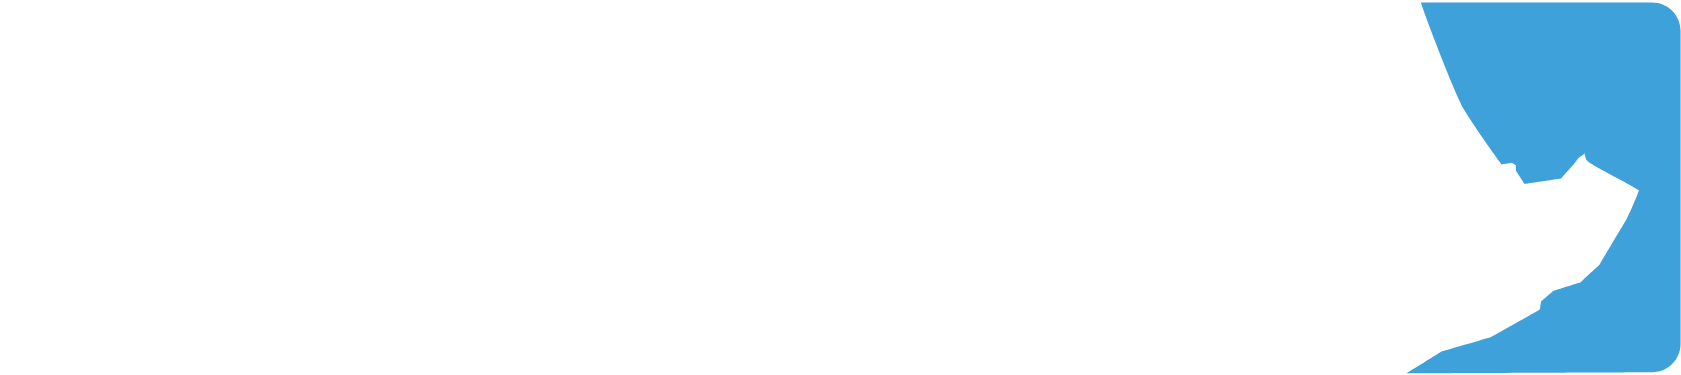 Bank AlJazira Logo groß für dunkle Hintergründe (transparentes PNG)